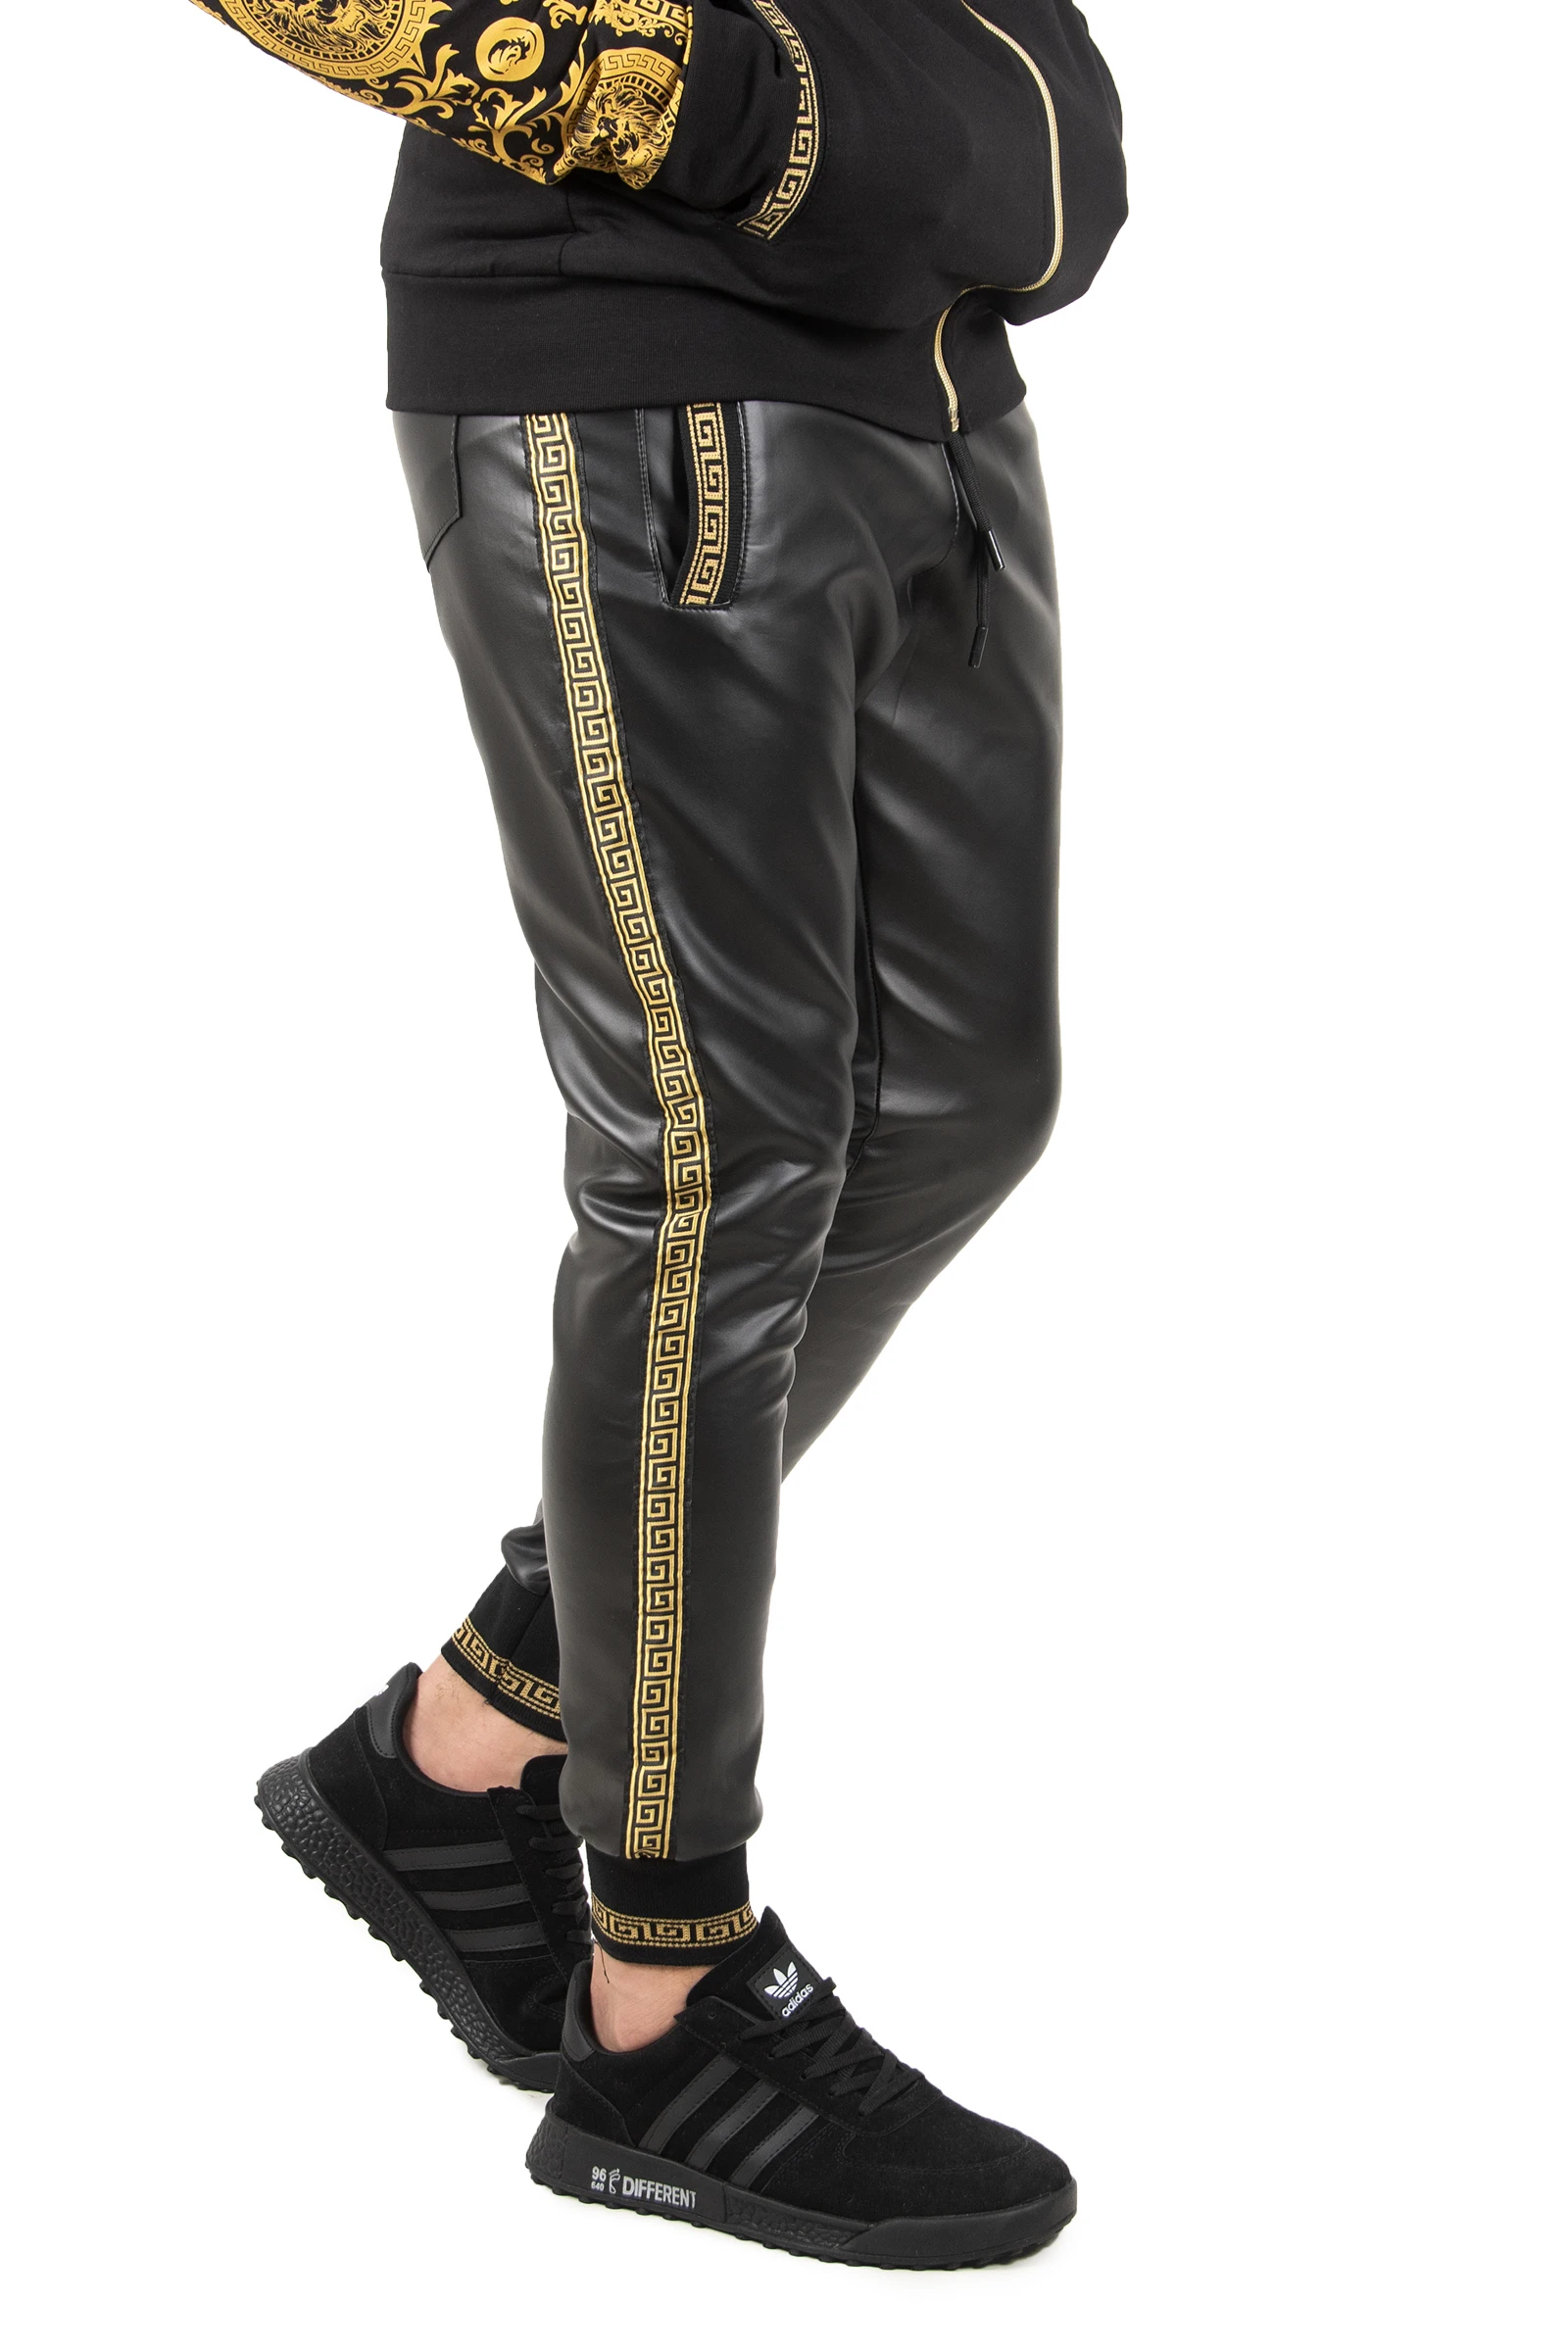 

DeepSEA Laced Beli and Pettitoes Wheel Sides Geometric Stripe Faux Leather Male Sweatpants 2200189